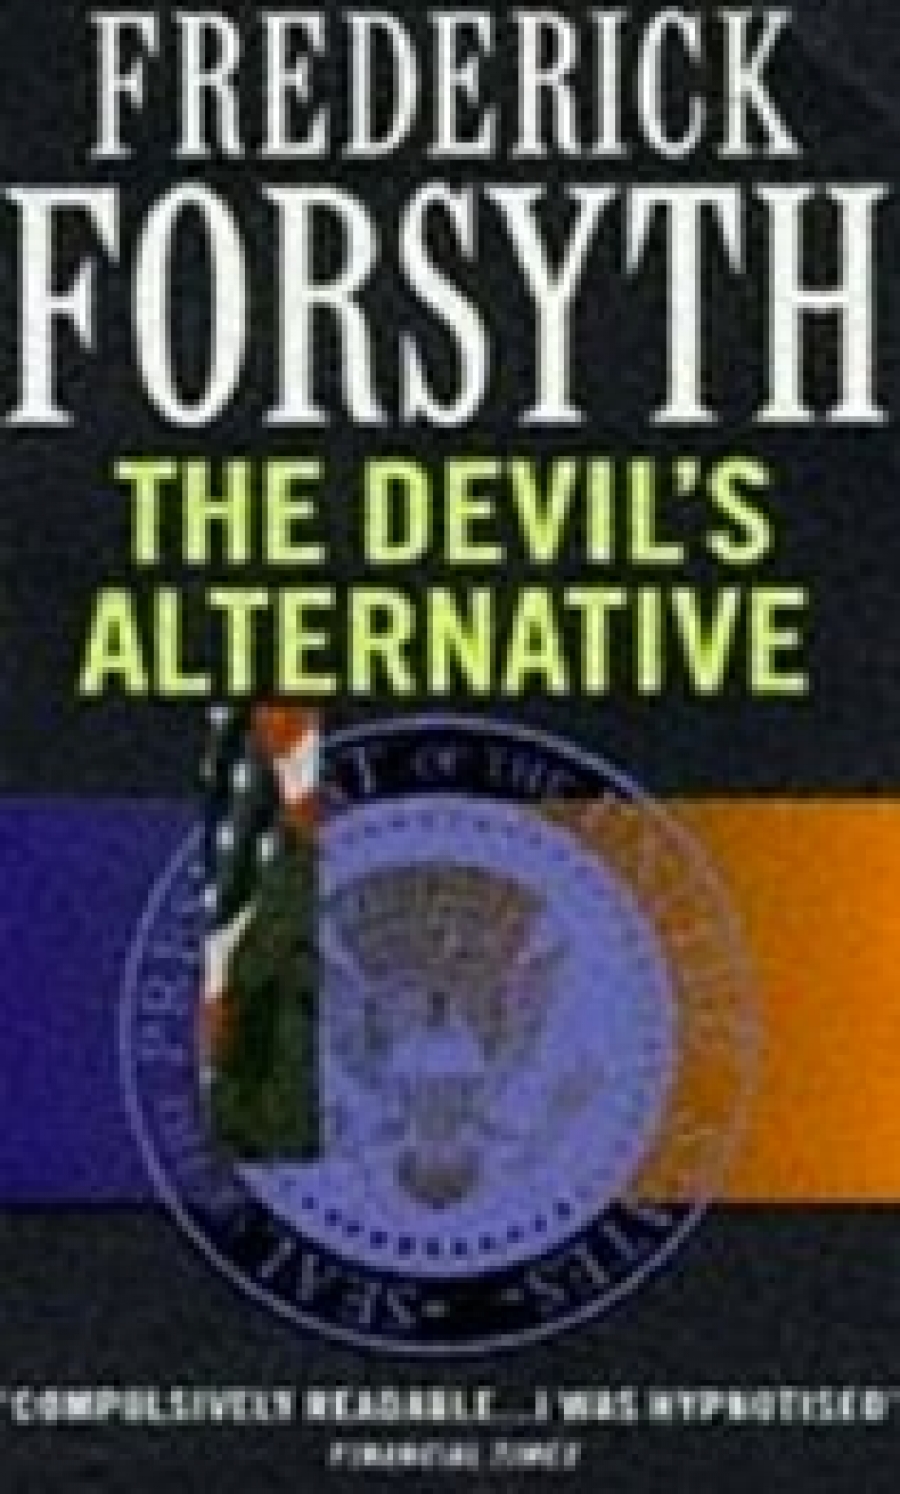 Forsyth, Frederick The Devil's Alternative 